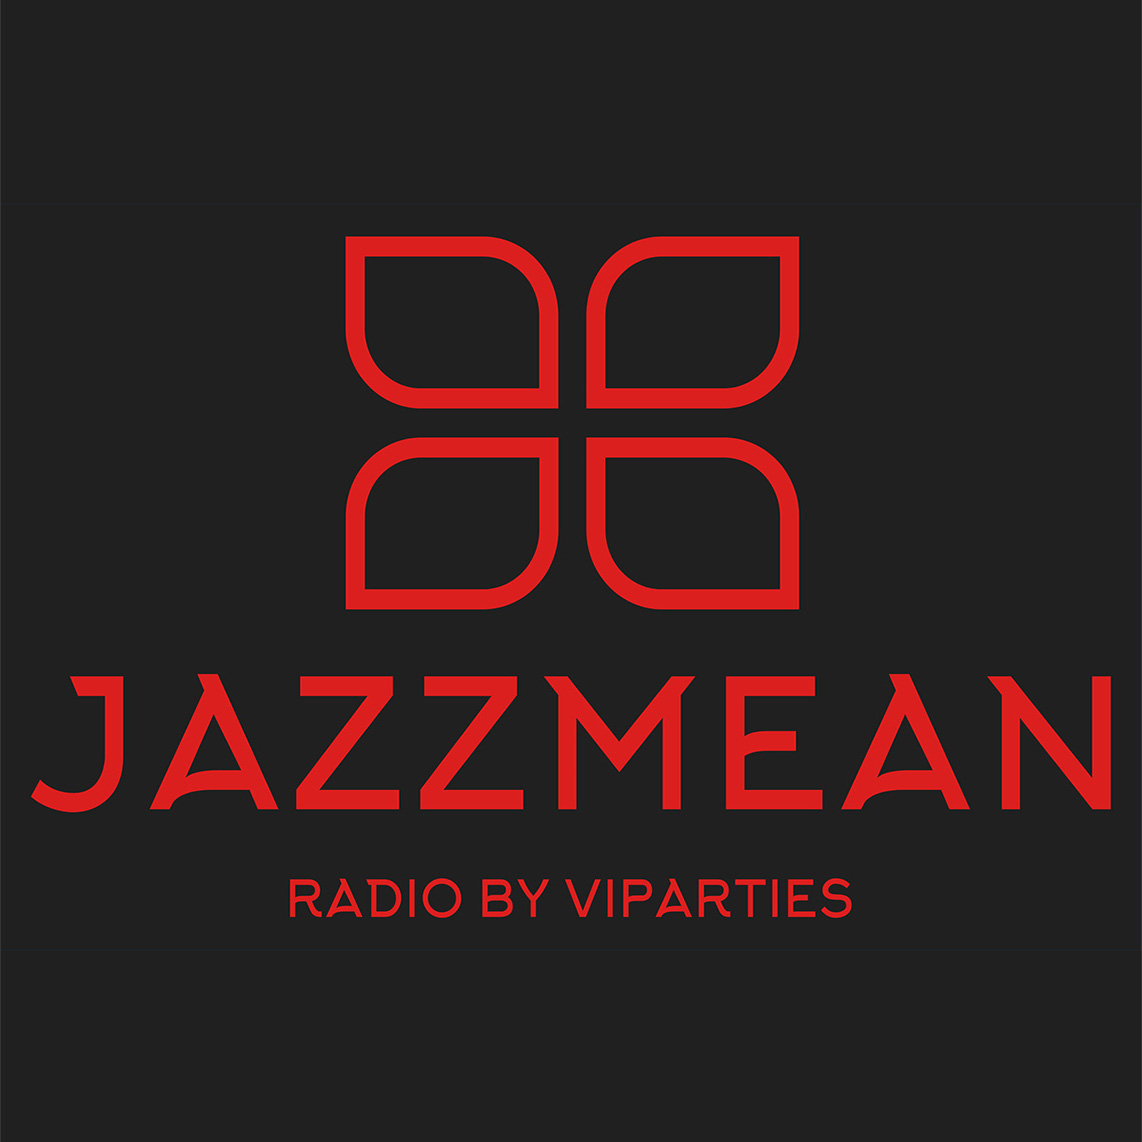 Jazzmean Radio